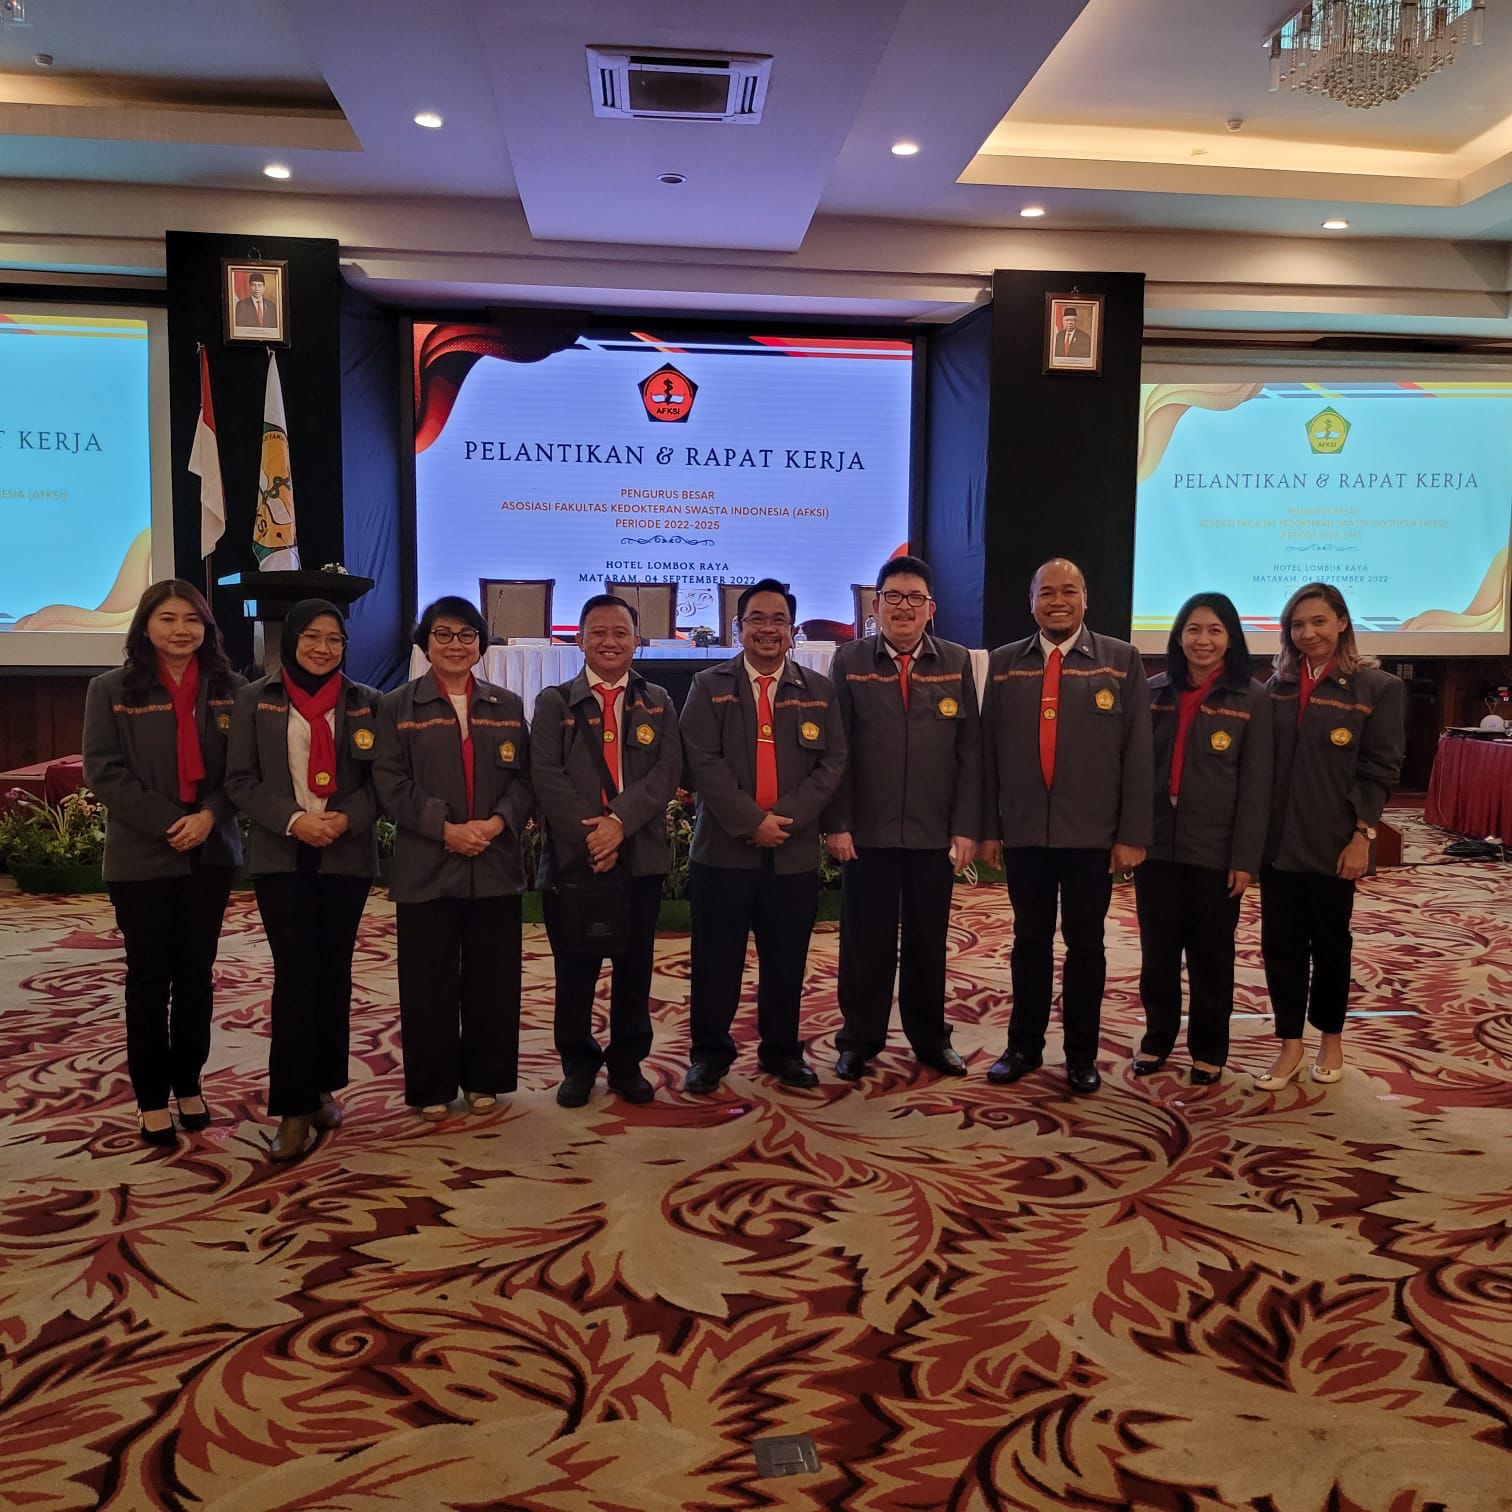 Pelantikan dan Rapat Kerja Pengurus Besar Asosiasi Fakultas Kedokteran Swasta Indonesia (AFKSI)